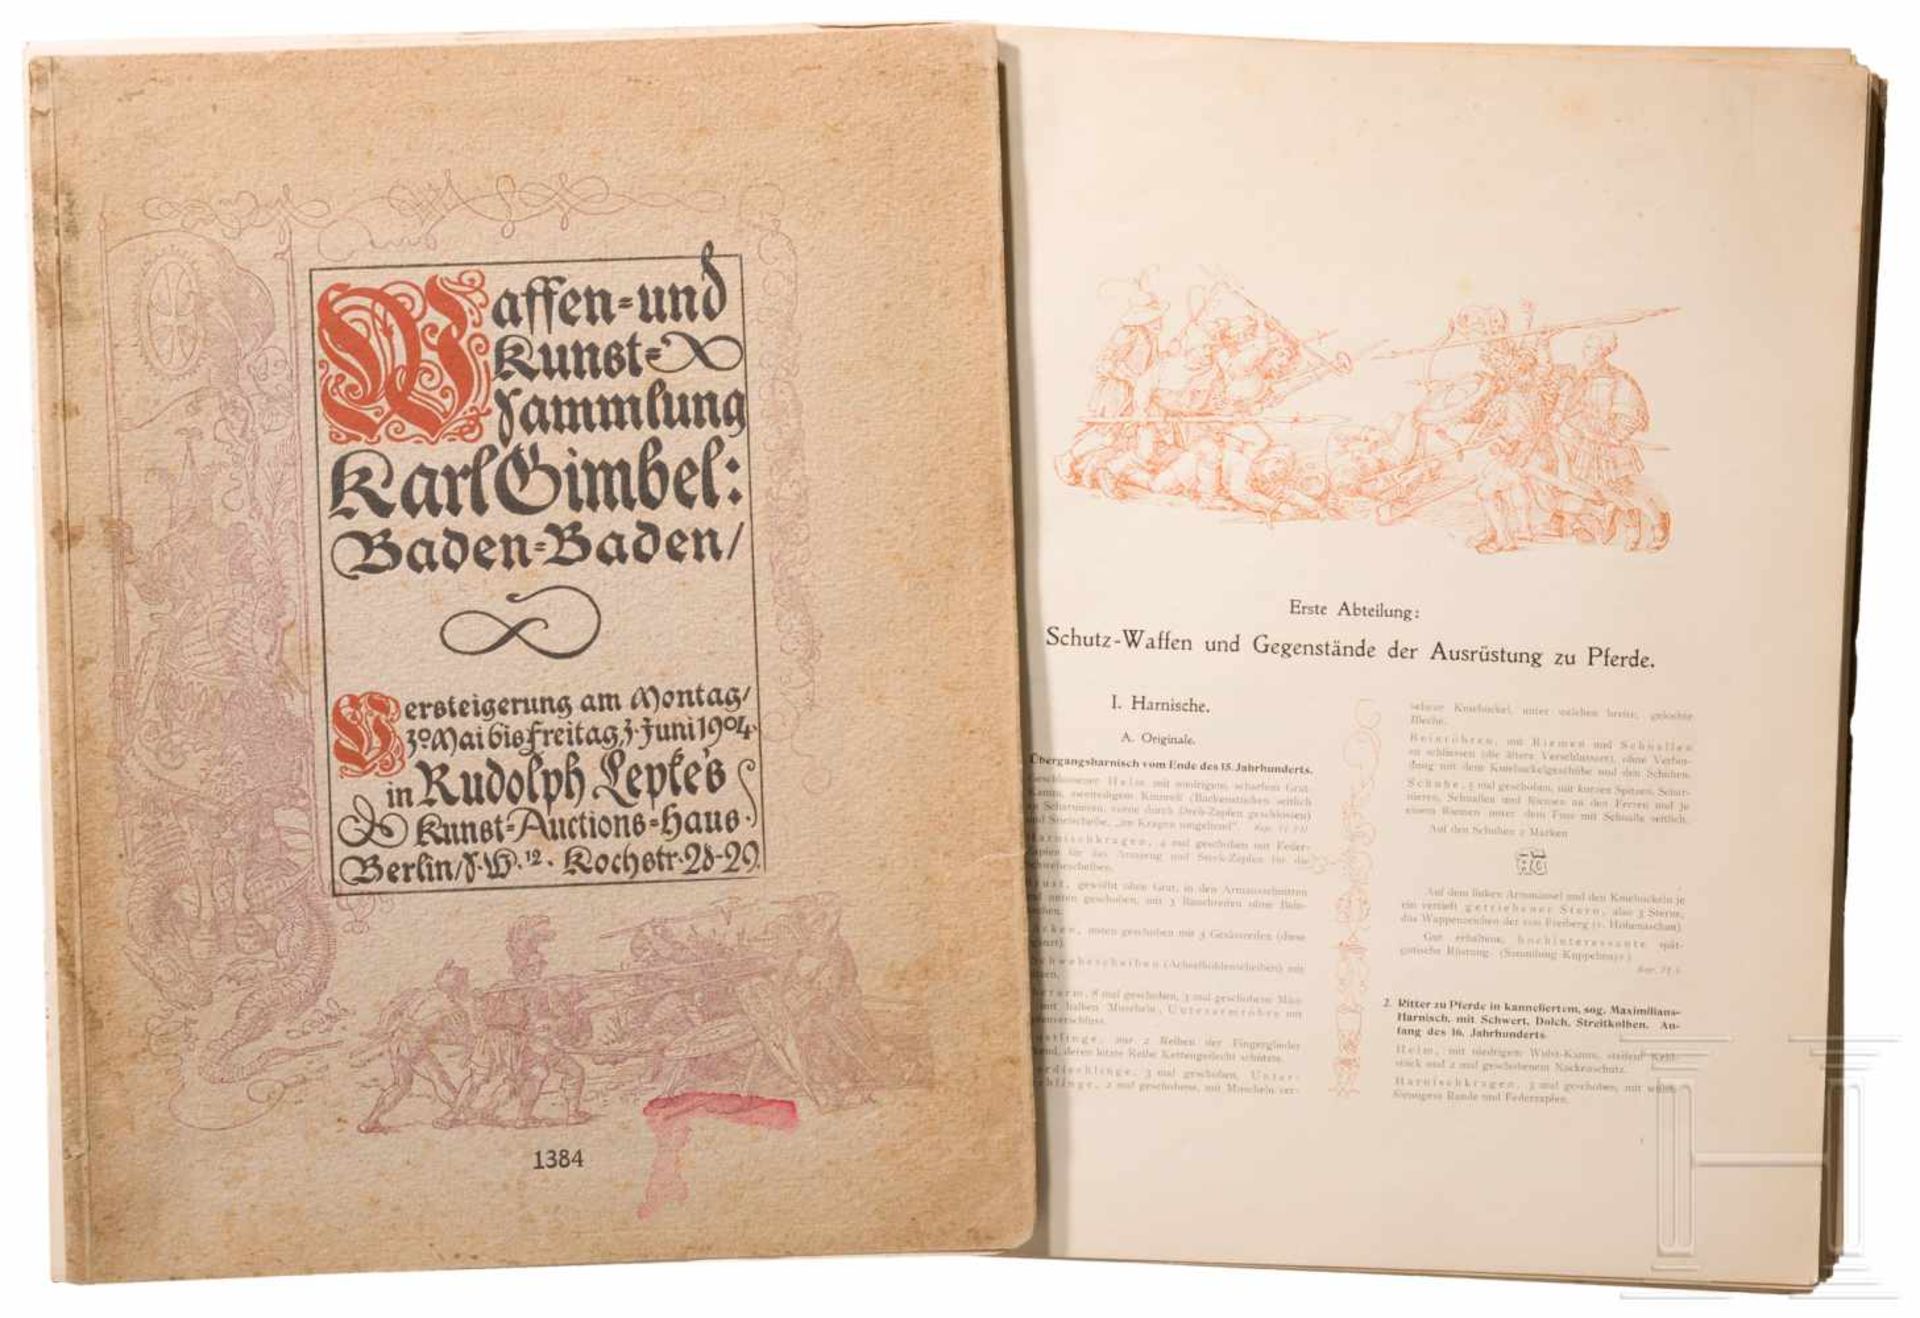 Auktionskatalog der Waffensammlung Karl Gimbel, Berlin, 1904Auktionskatalog der bekannten Baden-